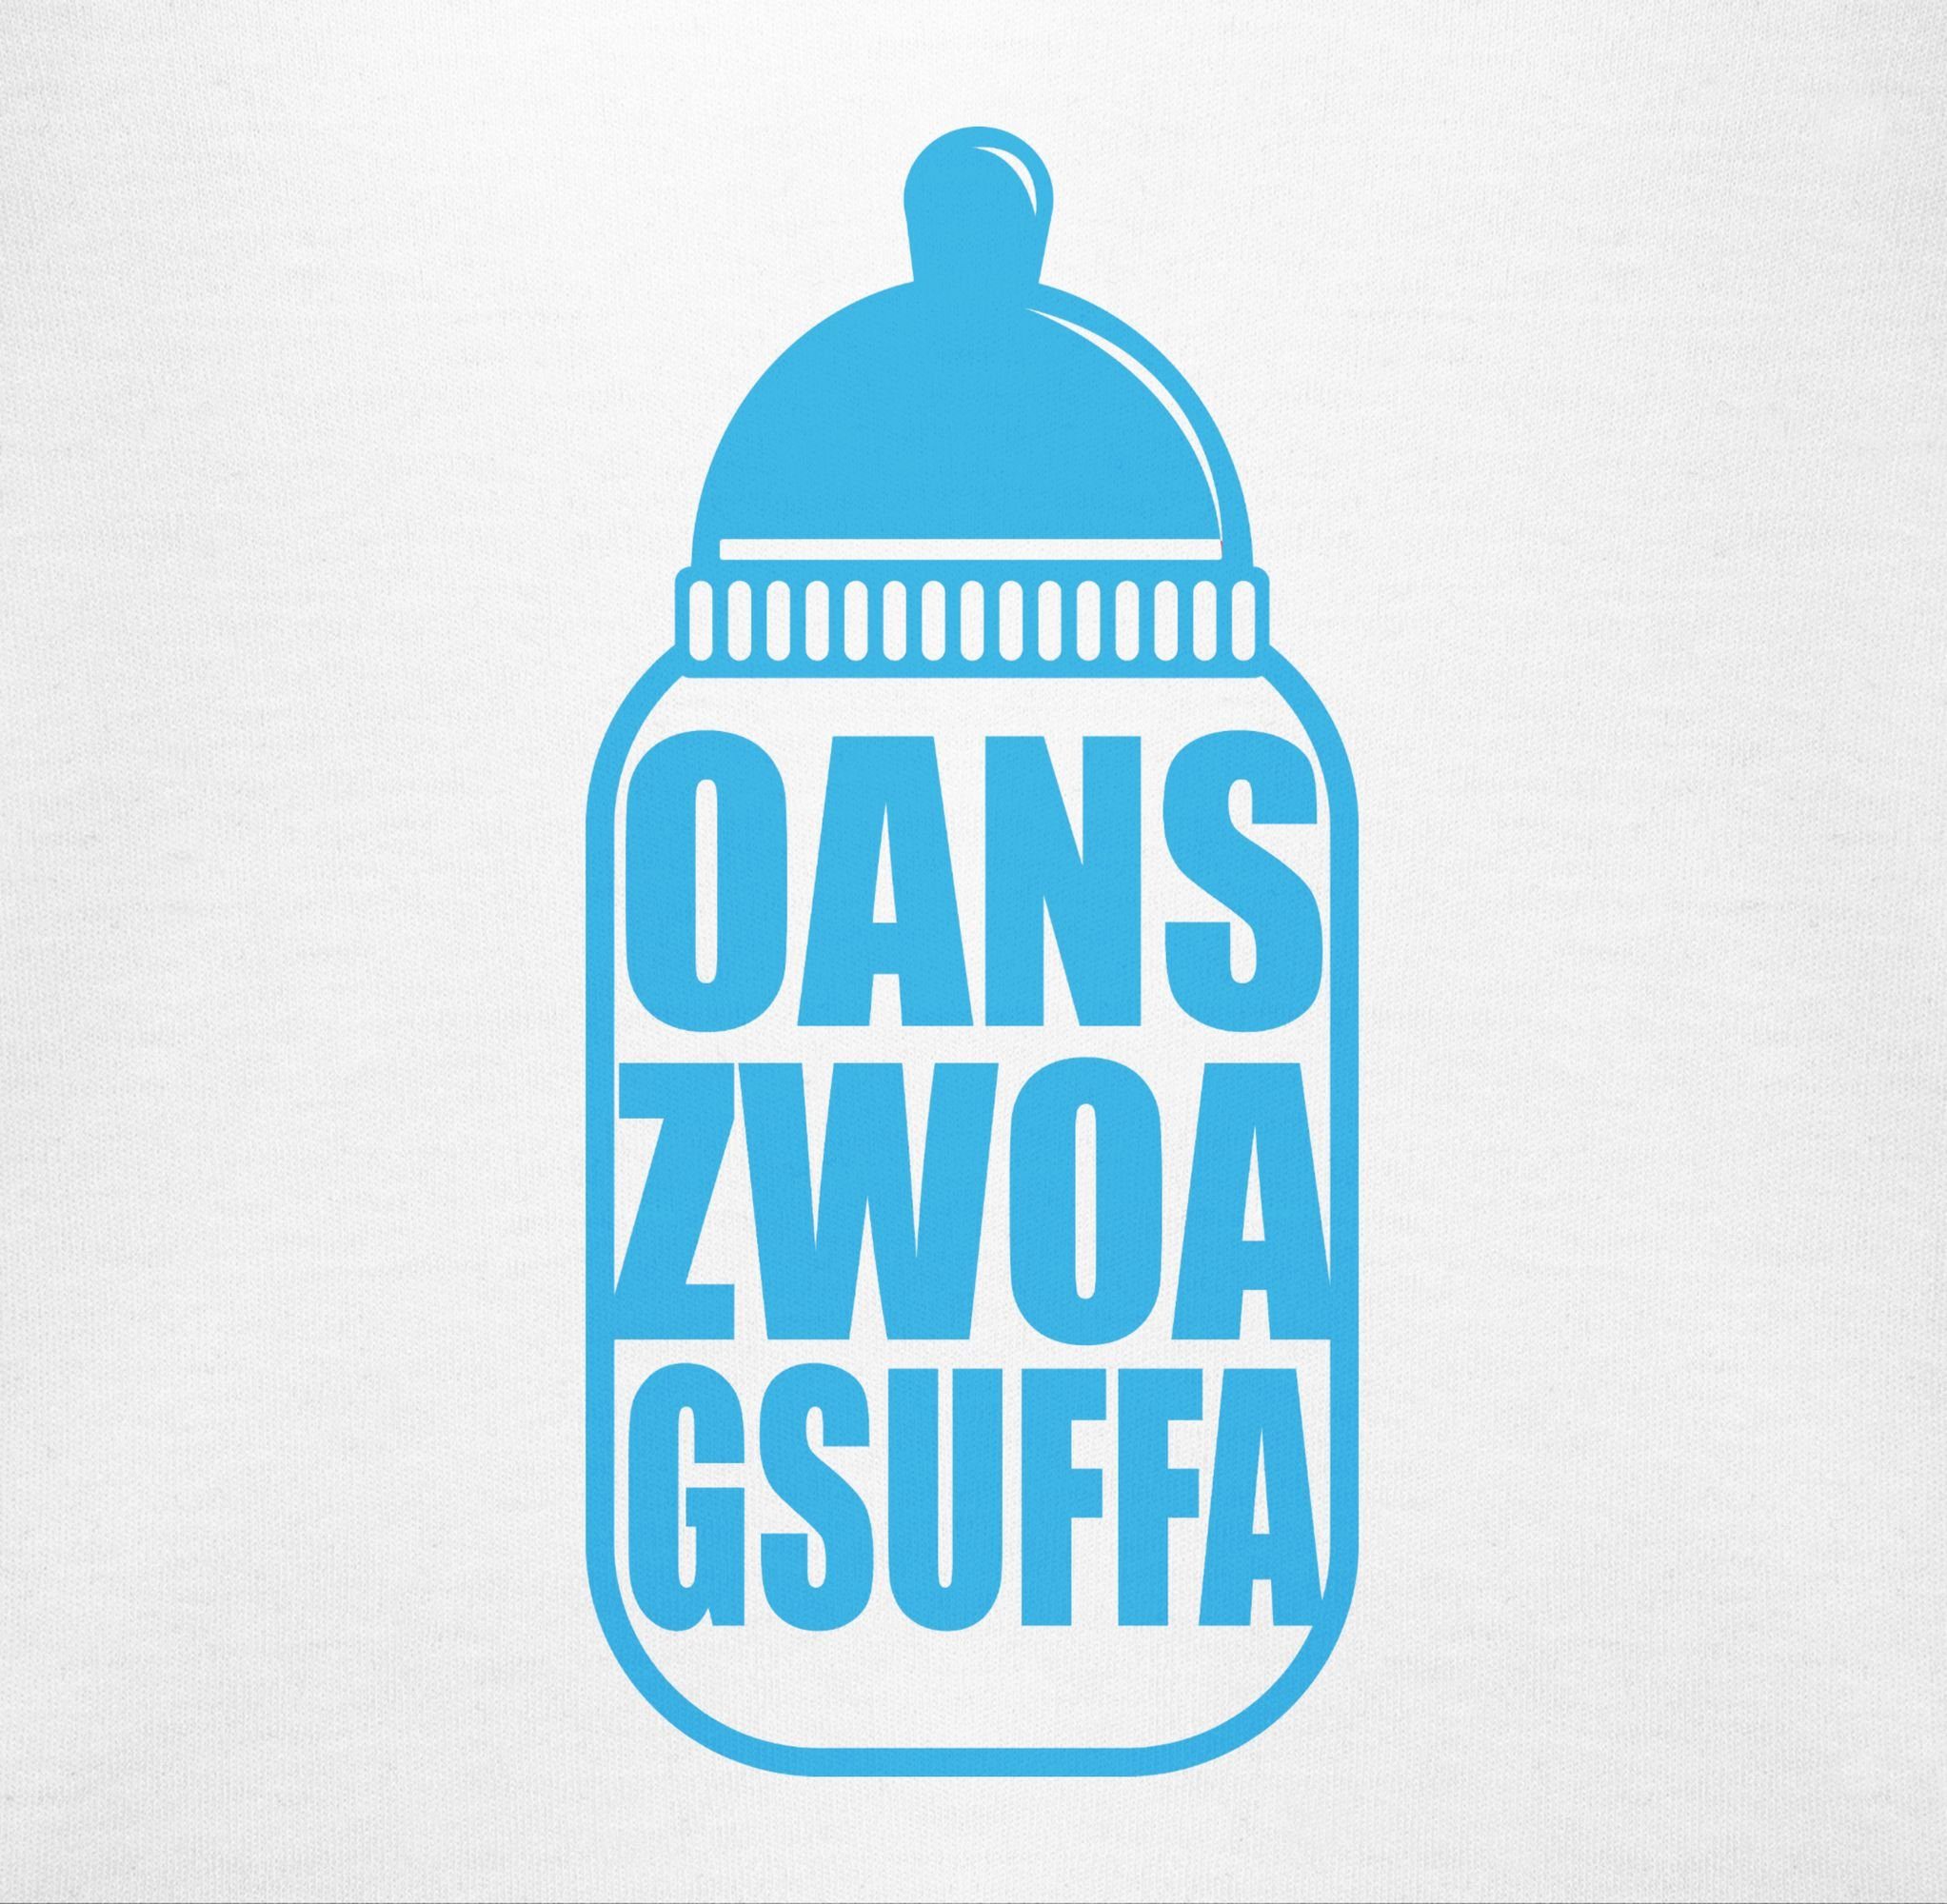 Shirtbody Gsuffa Weiß Zwoa Oans Outfit Oktoberfest blau 2 Babyflasche für Baby Mode Shirtracer